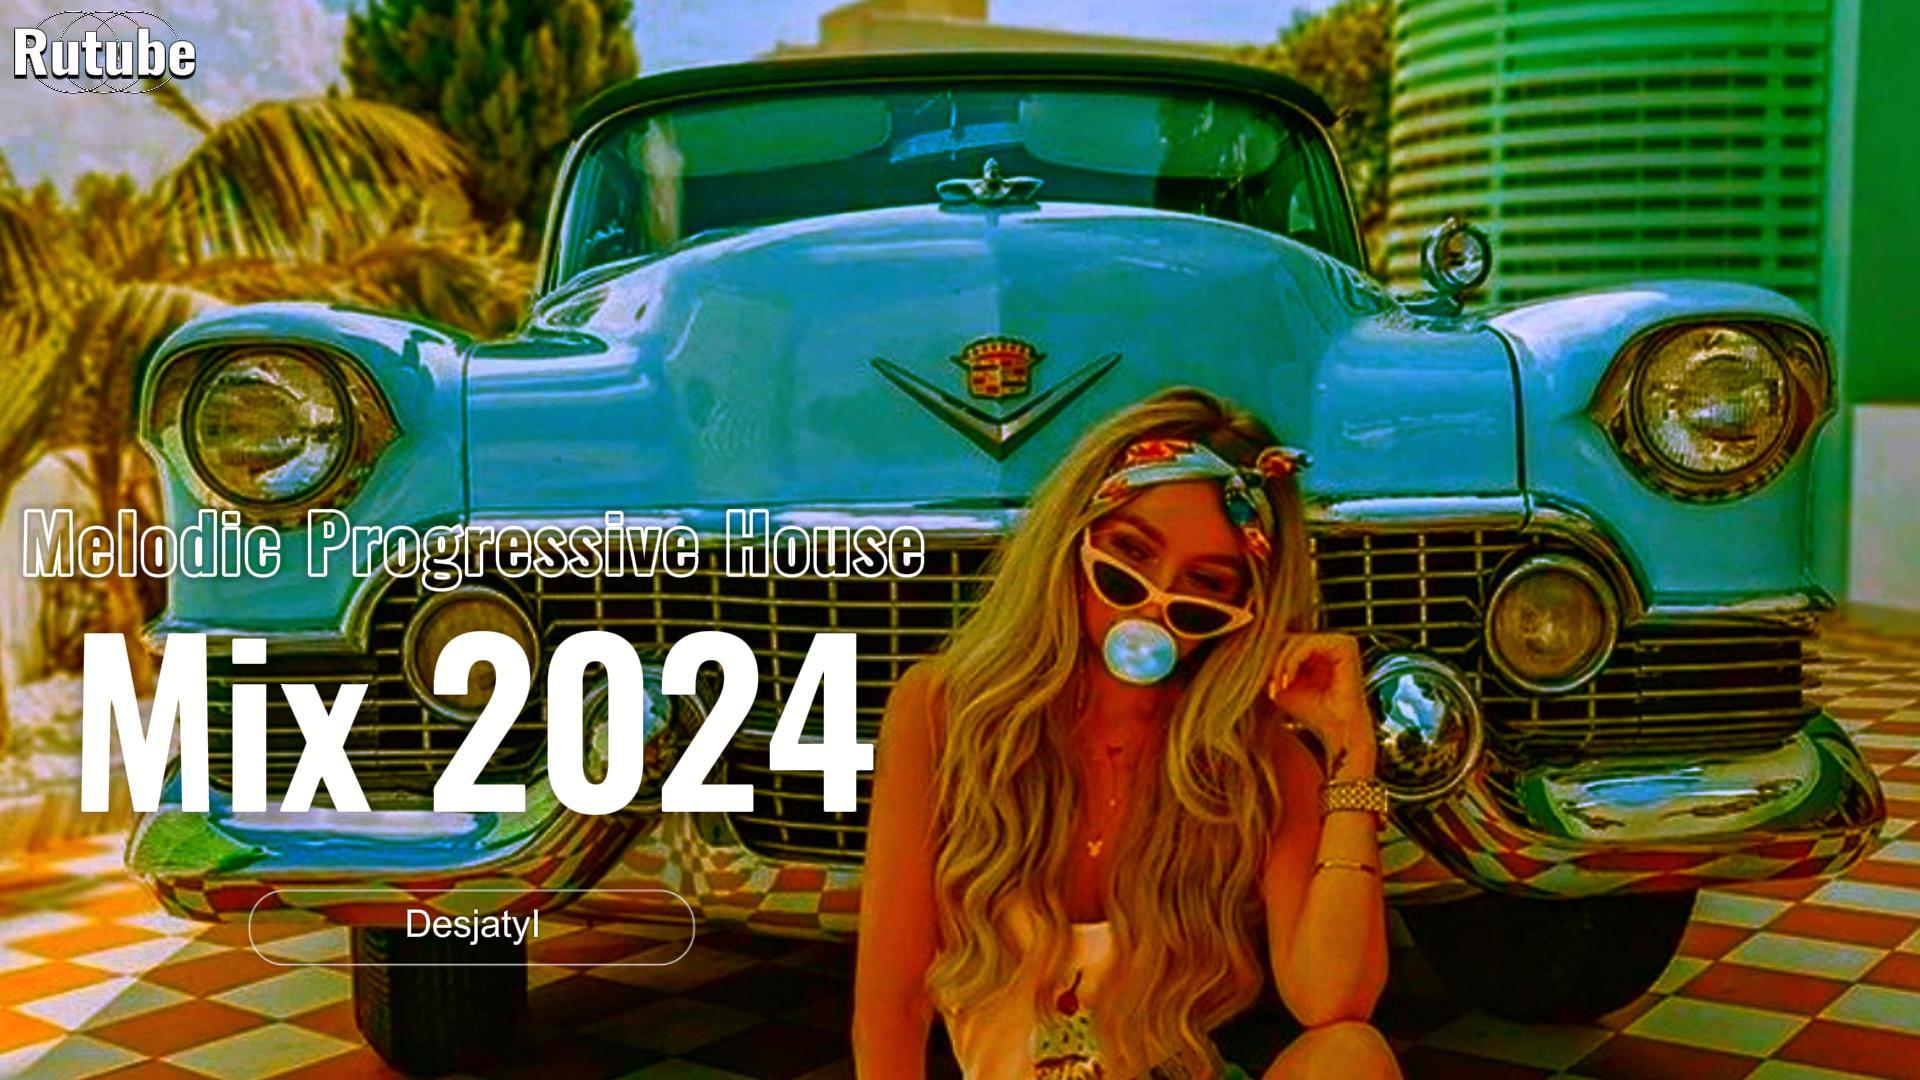 Melodic & Progressive House Mix 2024